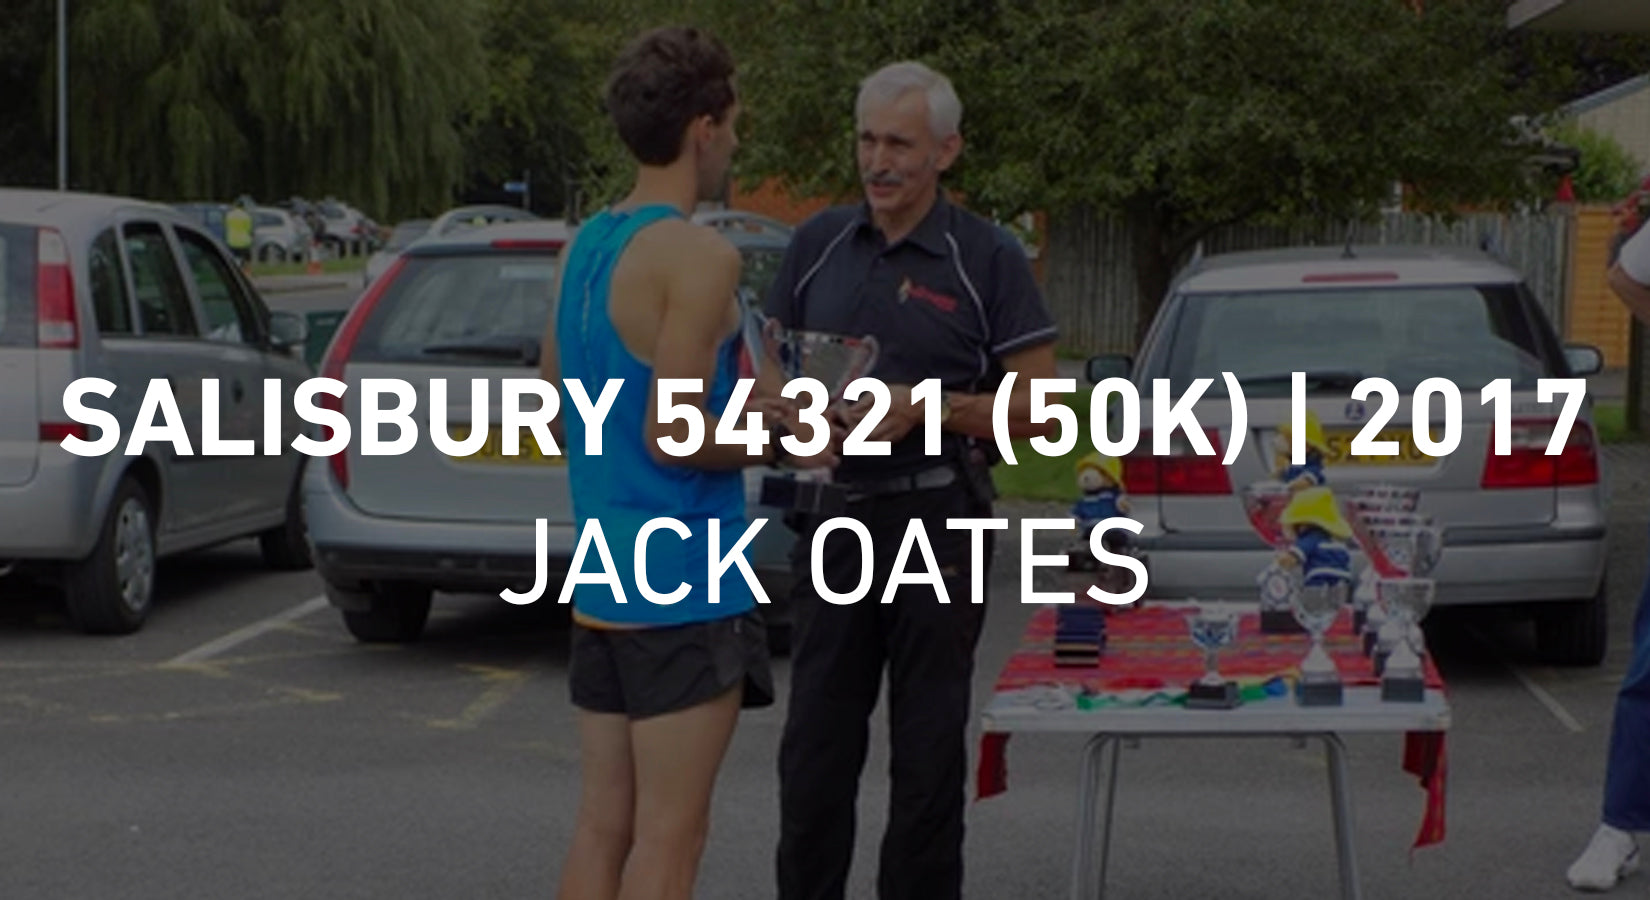 Race Report - Salisbury 54321 50k - 2017 - Jack Oates